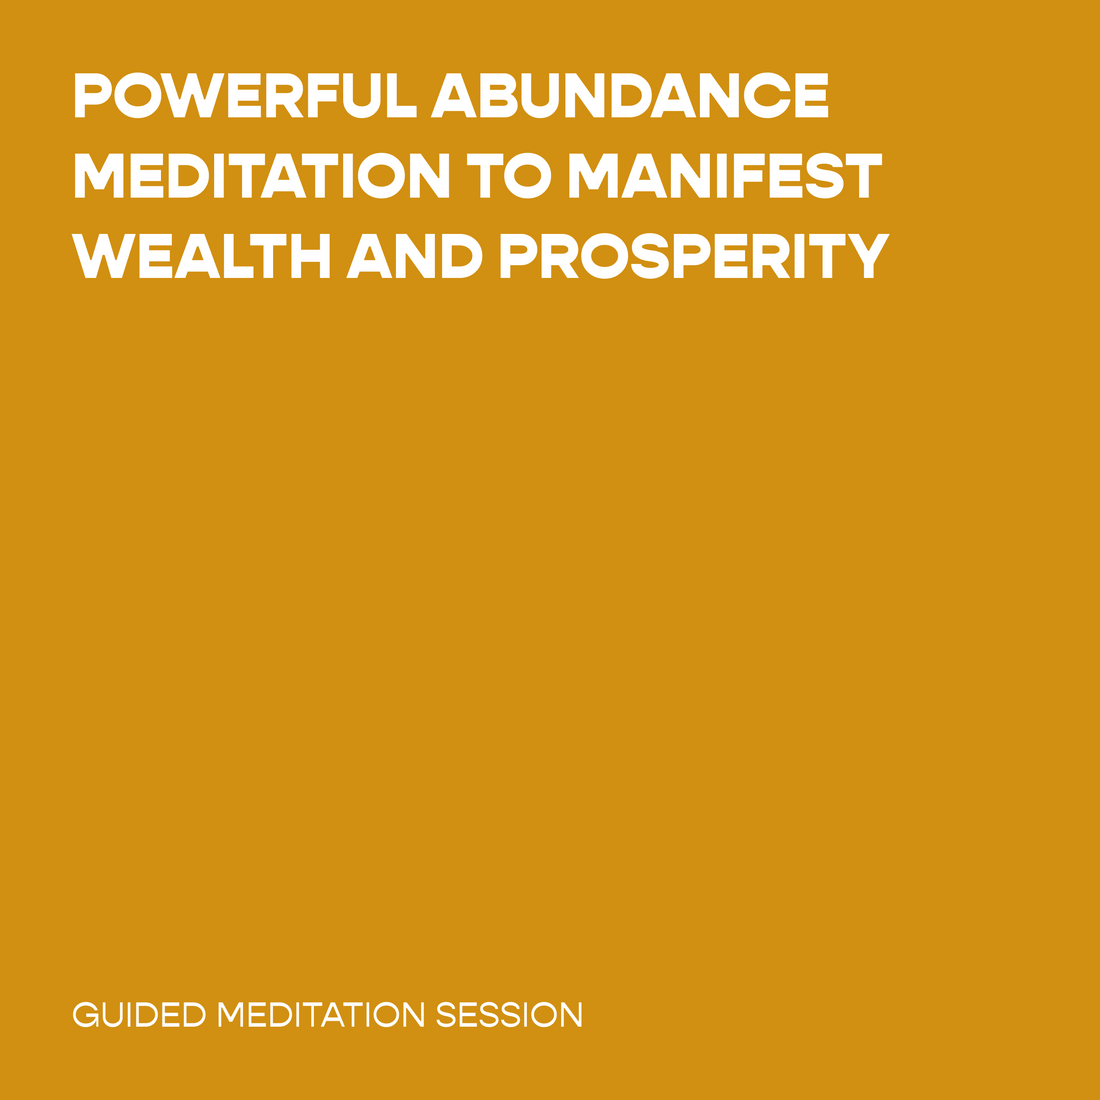 Powerful Abundance Meditation to Manifest Wealth and Prosperity